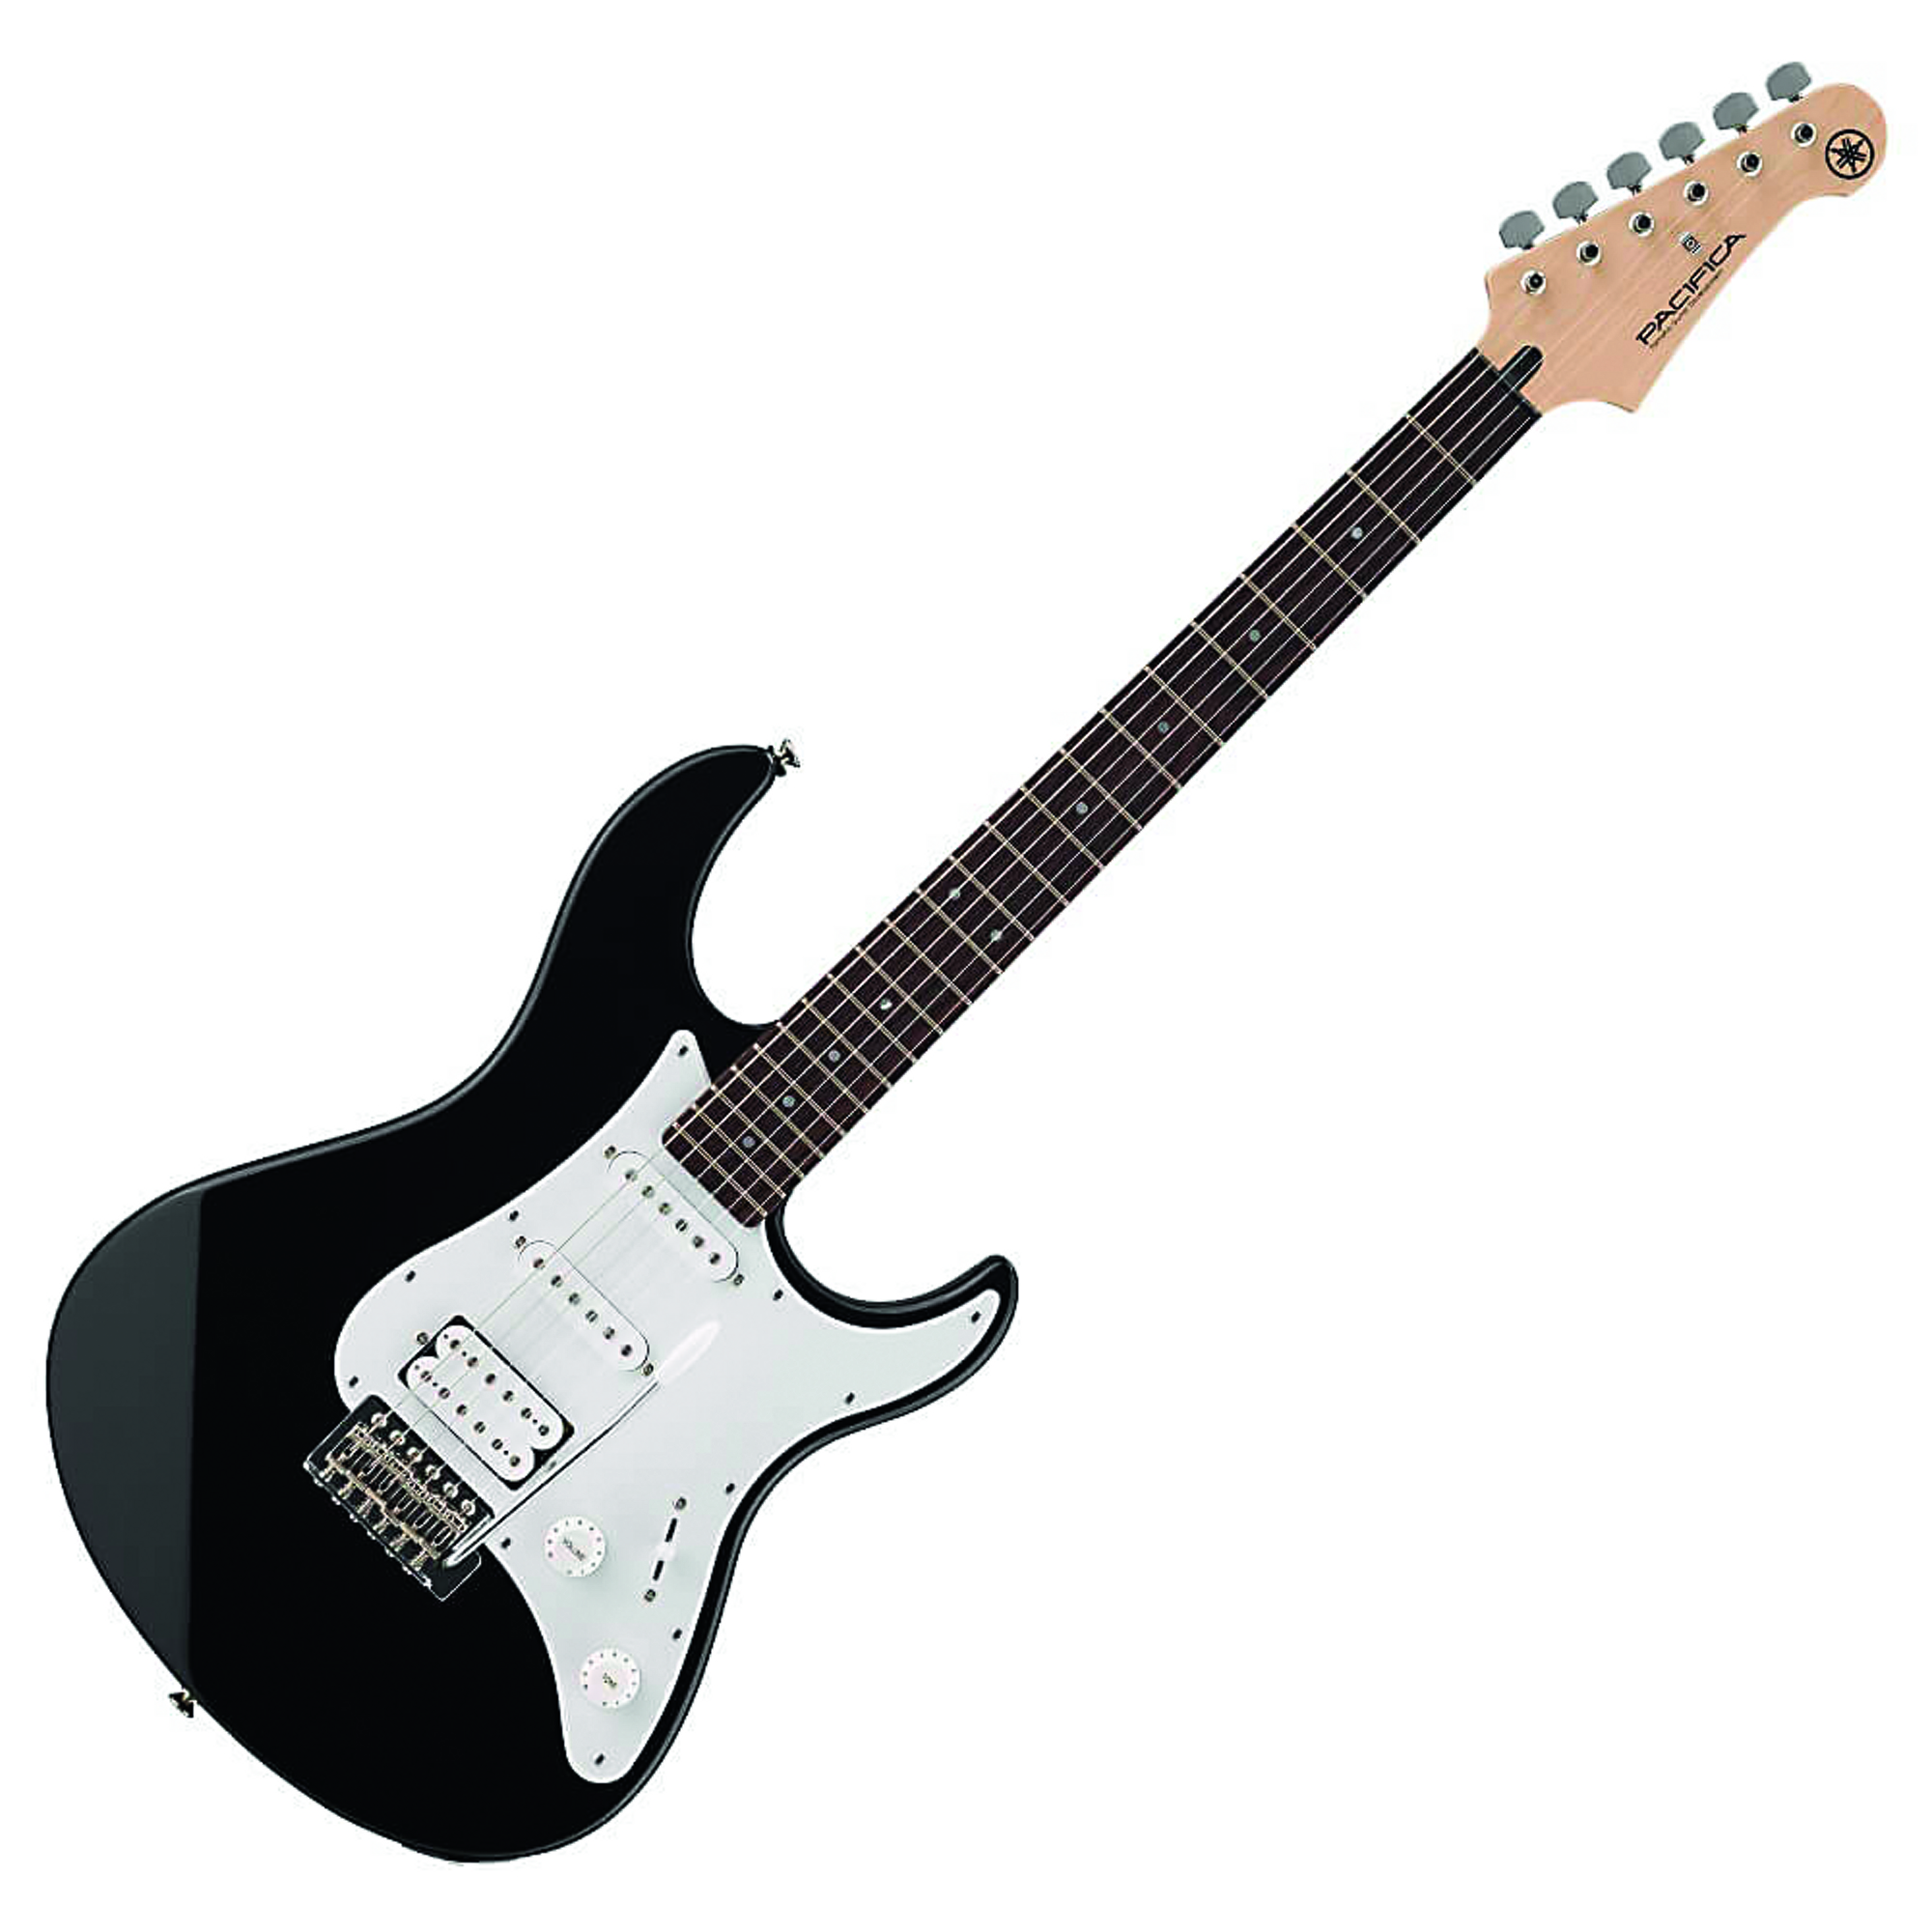 HC1875348 - YAMAHA Pacifica 012 Electric Guitar - Black/White